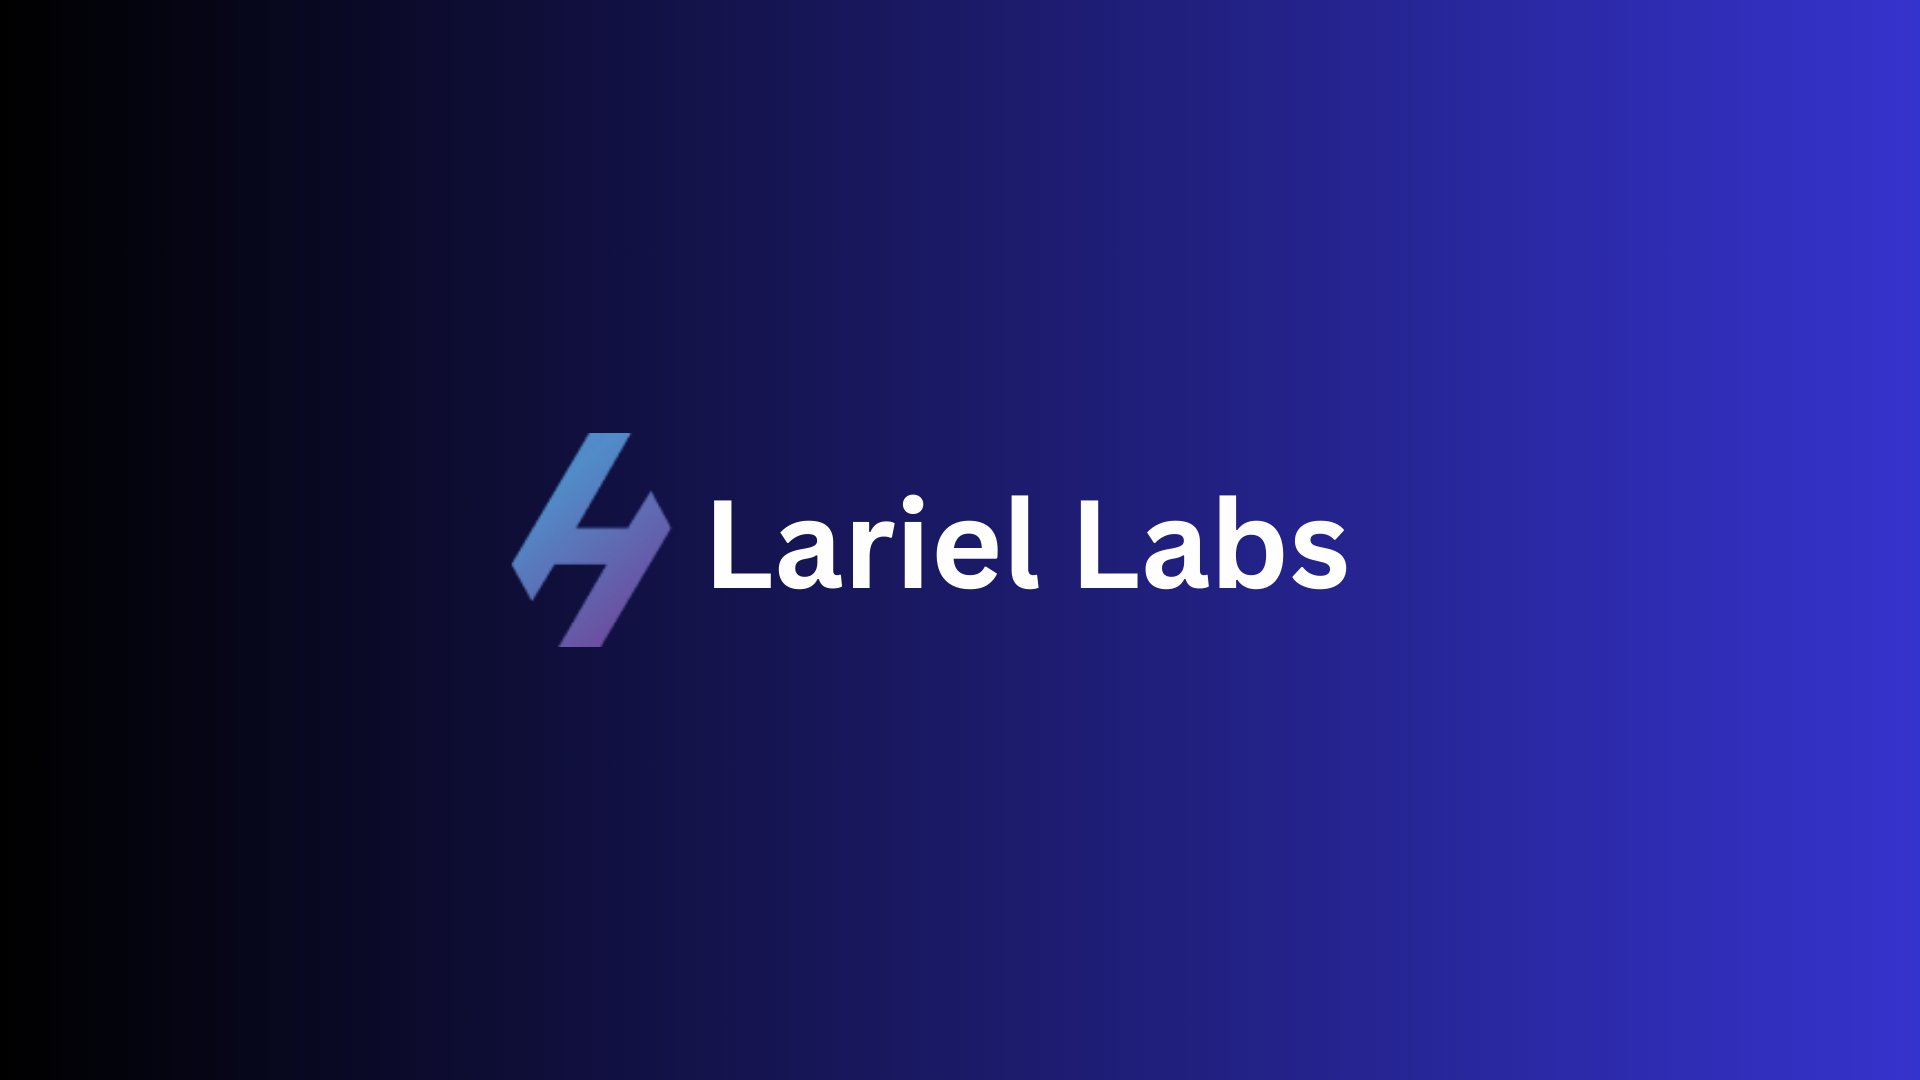 Lariel Labs Image 1